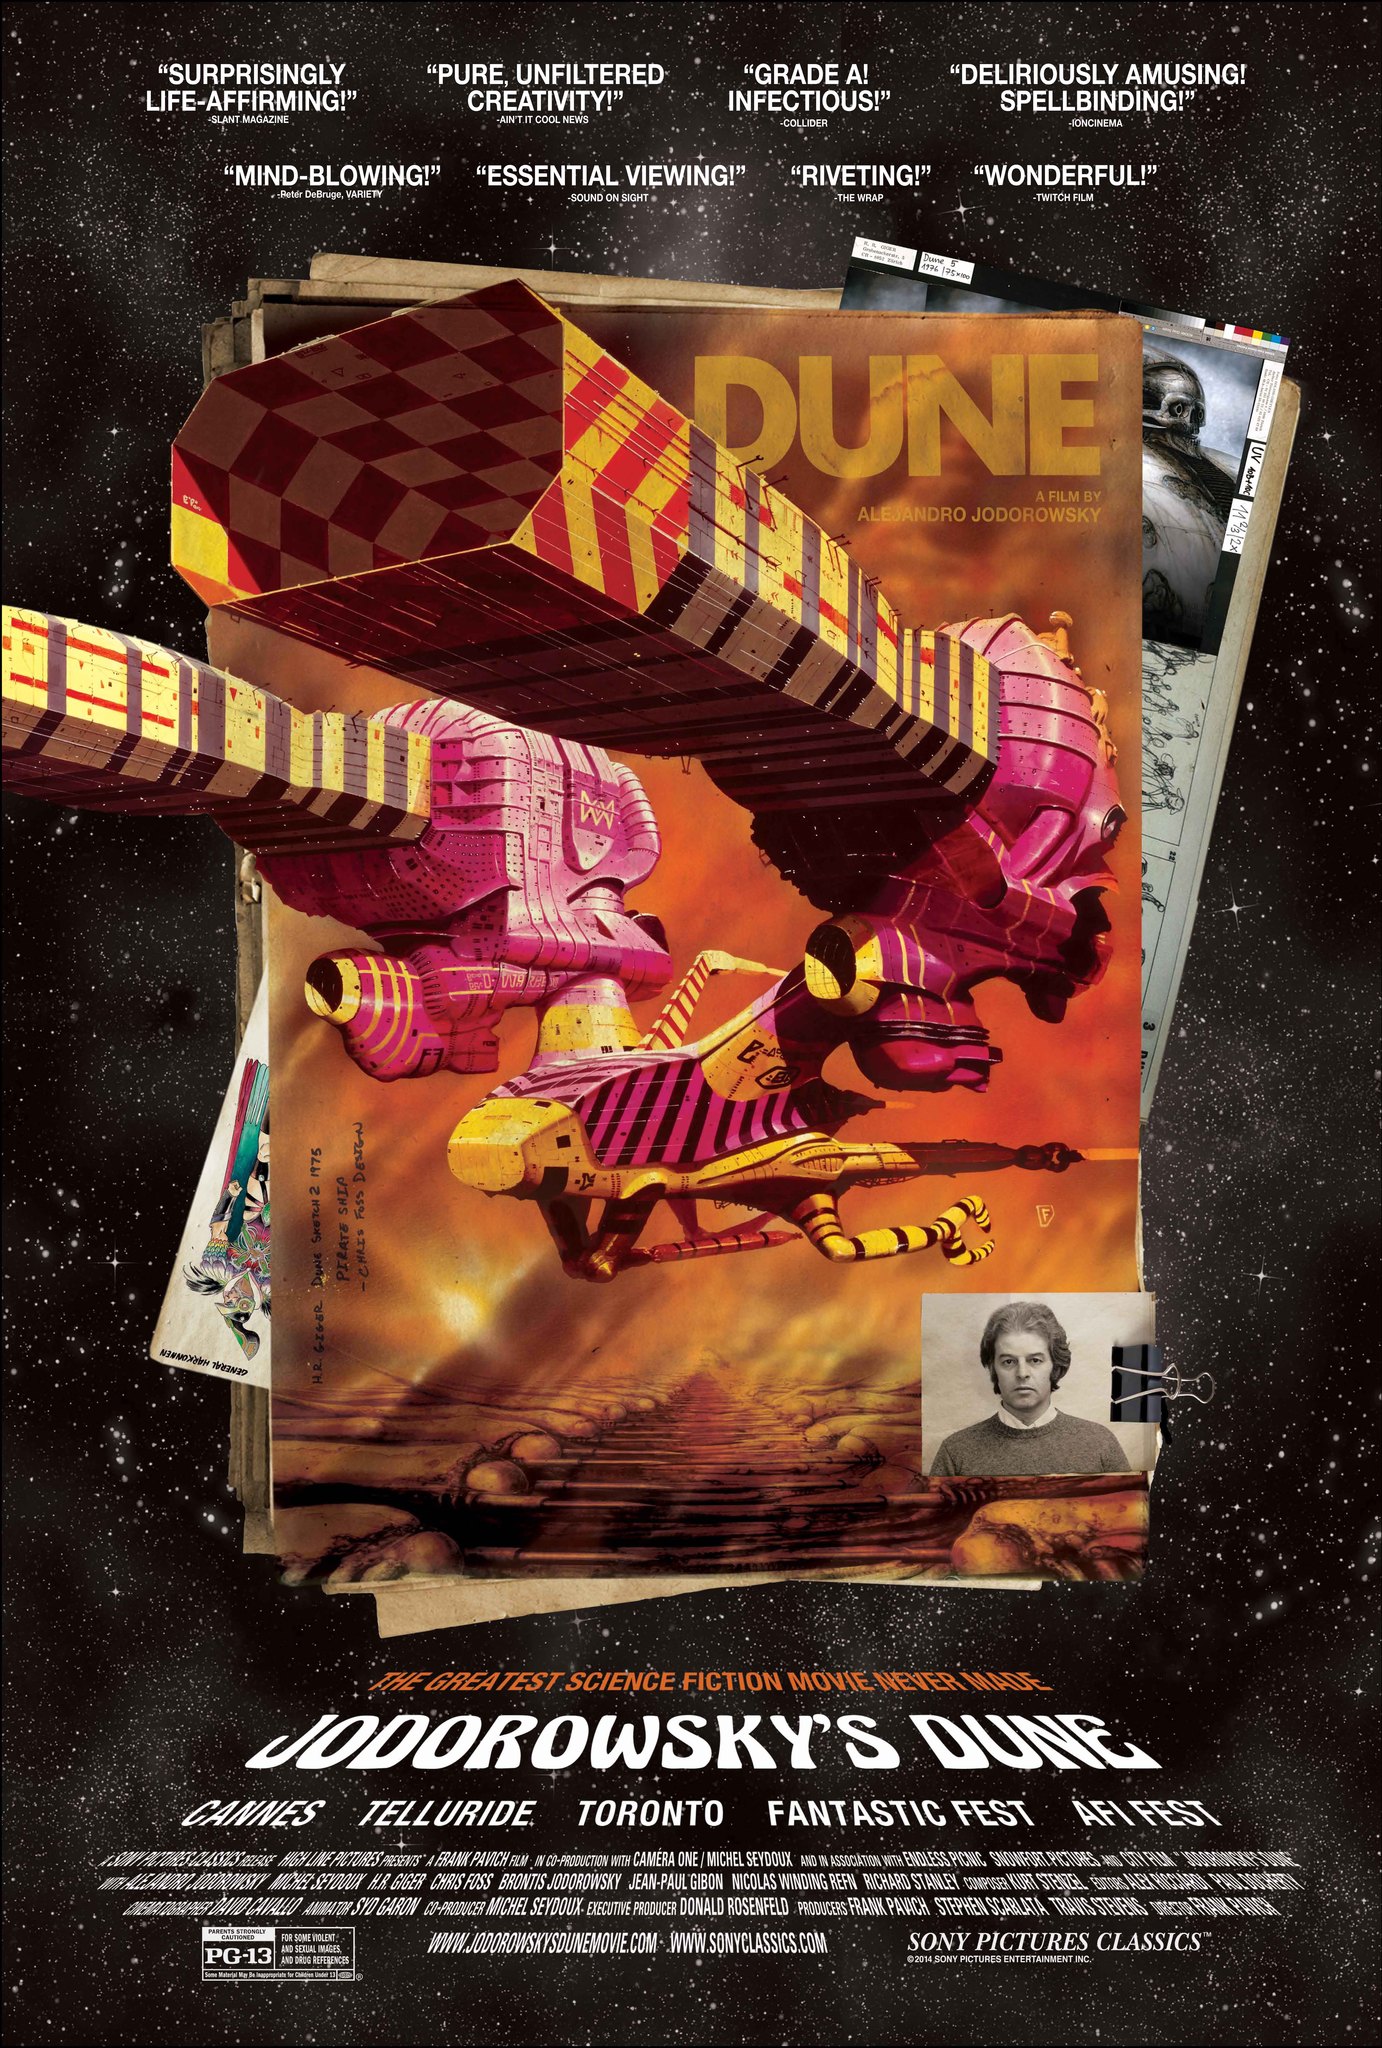 Nonton film Jodorowskys Dune layarkaca21 indoxx1 ganool online streaming terbaru